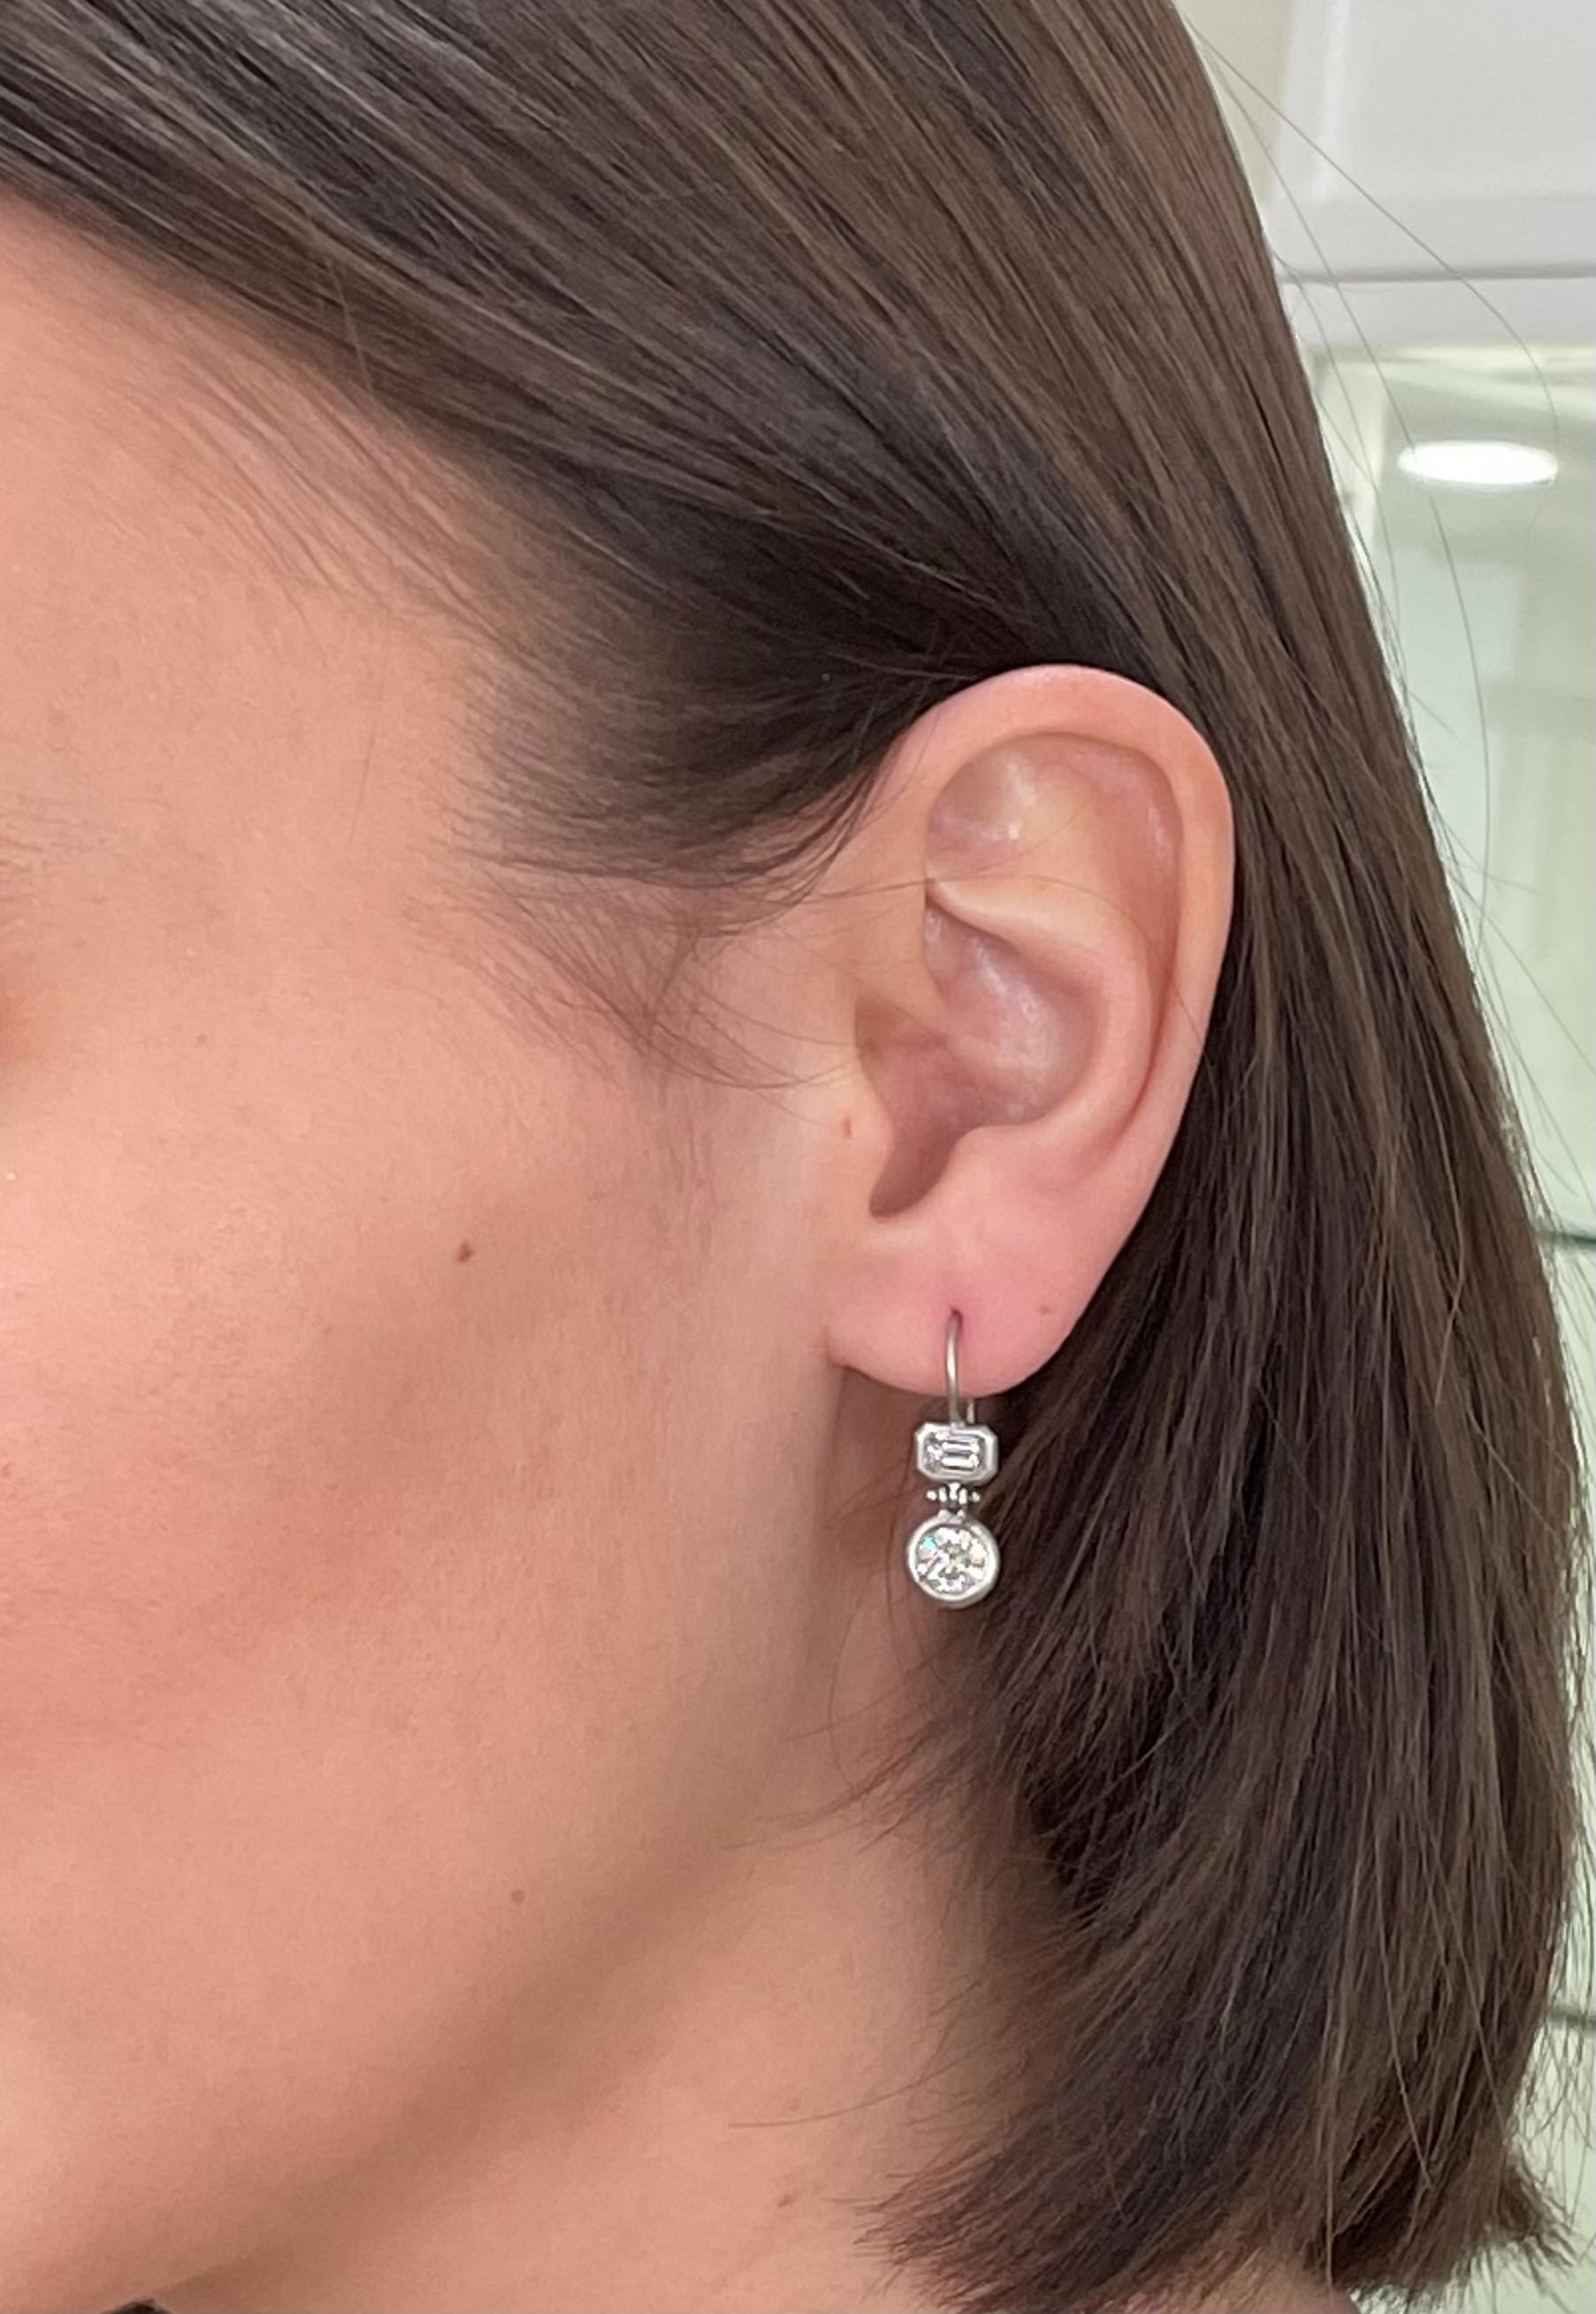 how much was kim's diamond earring